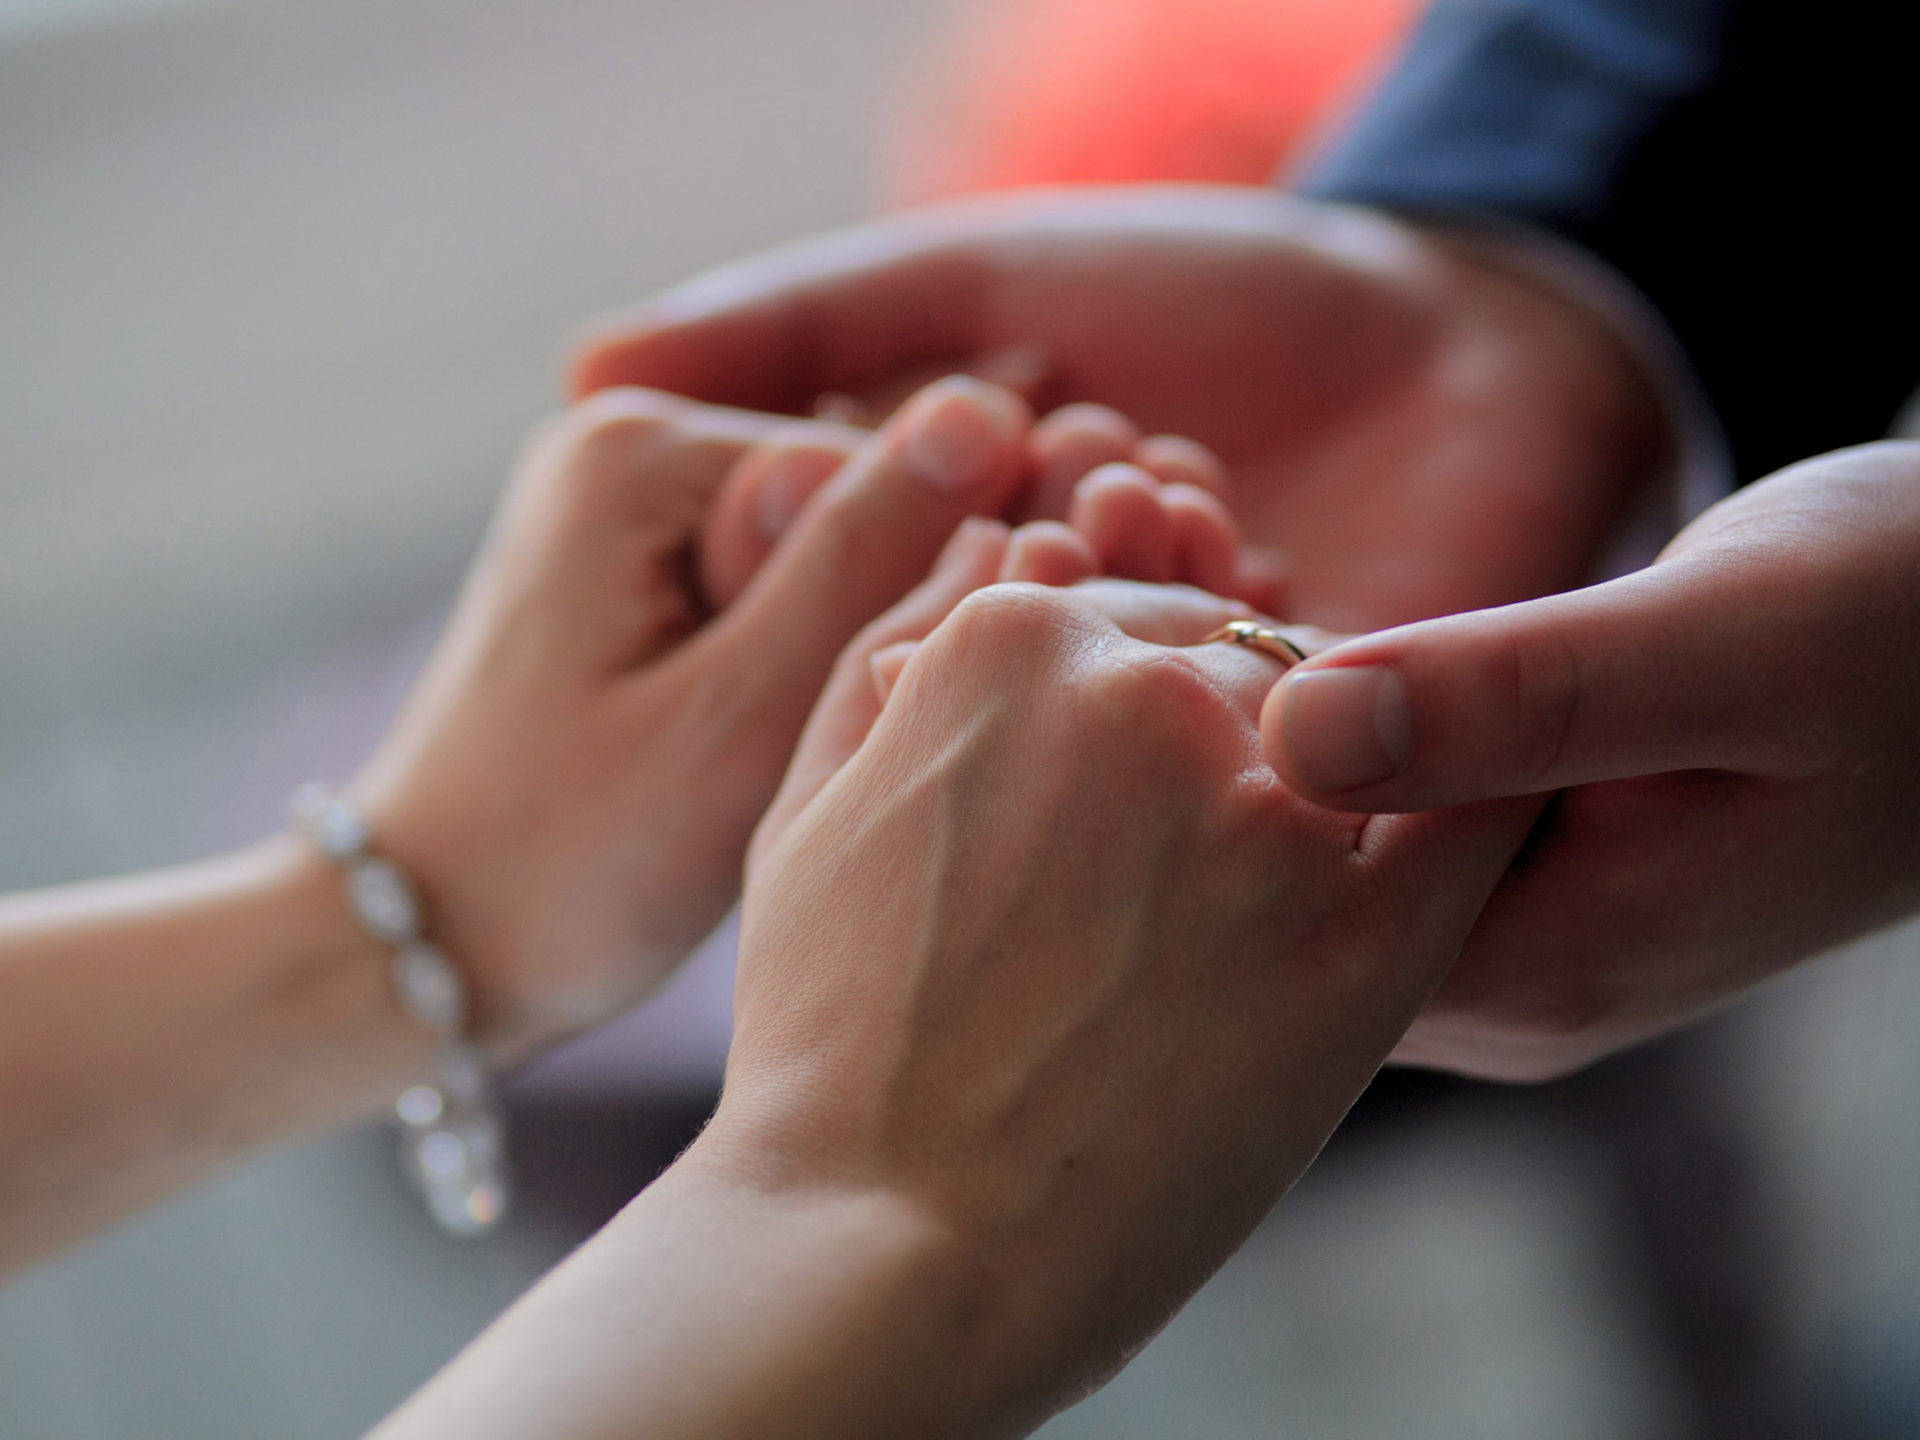 Holding Hands In Romantic Way